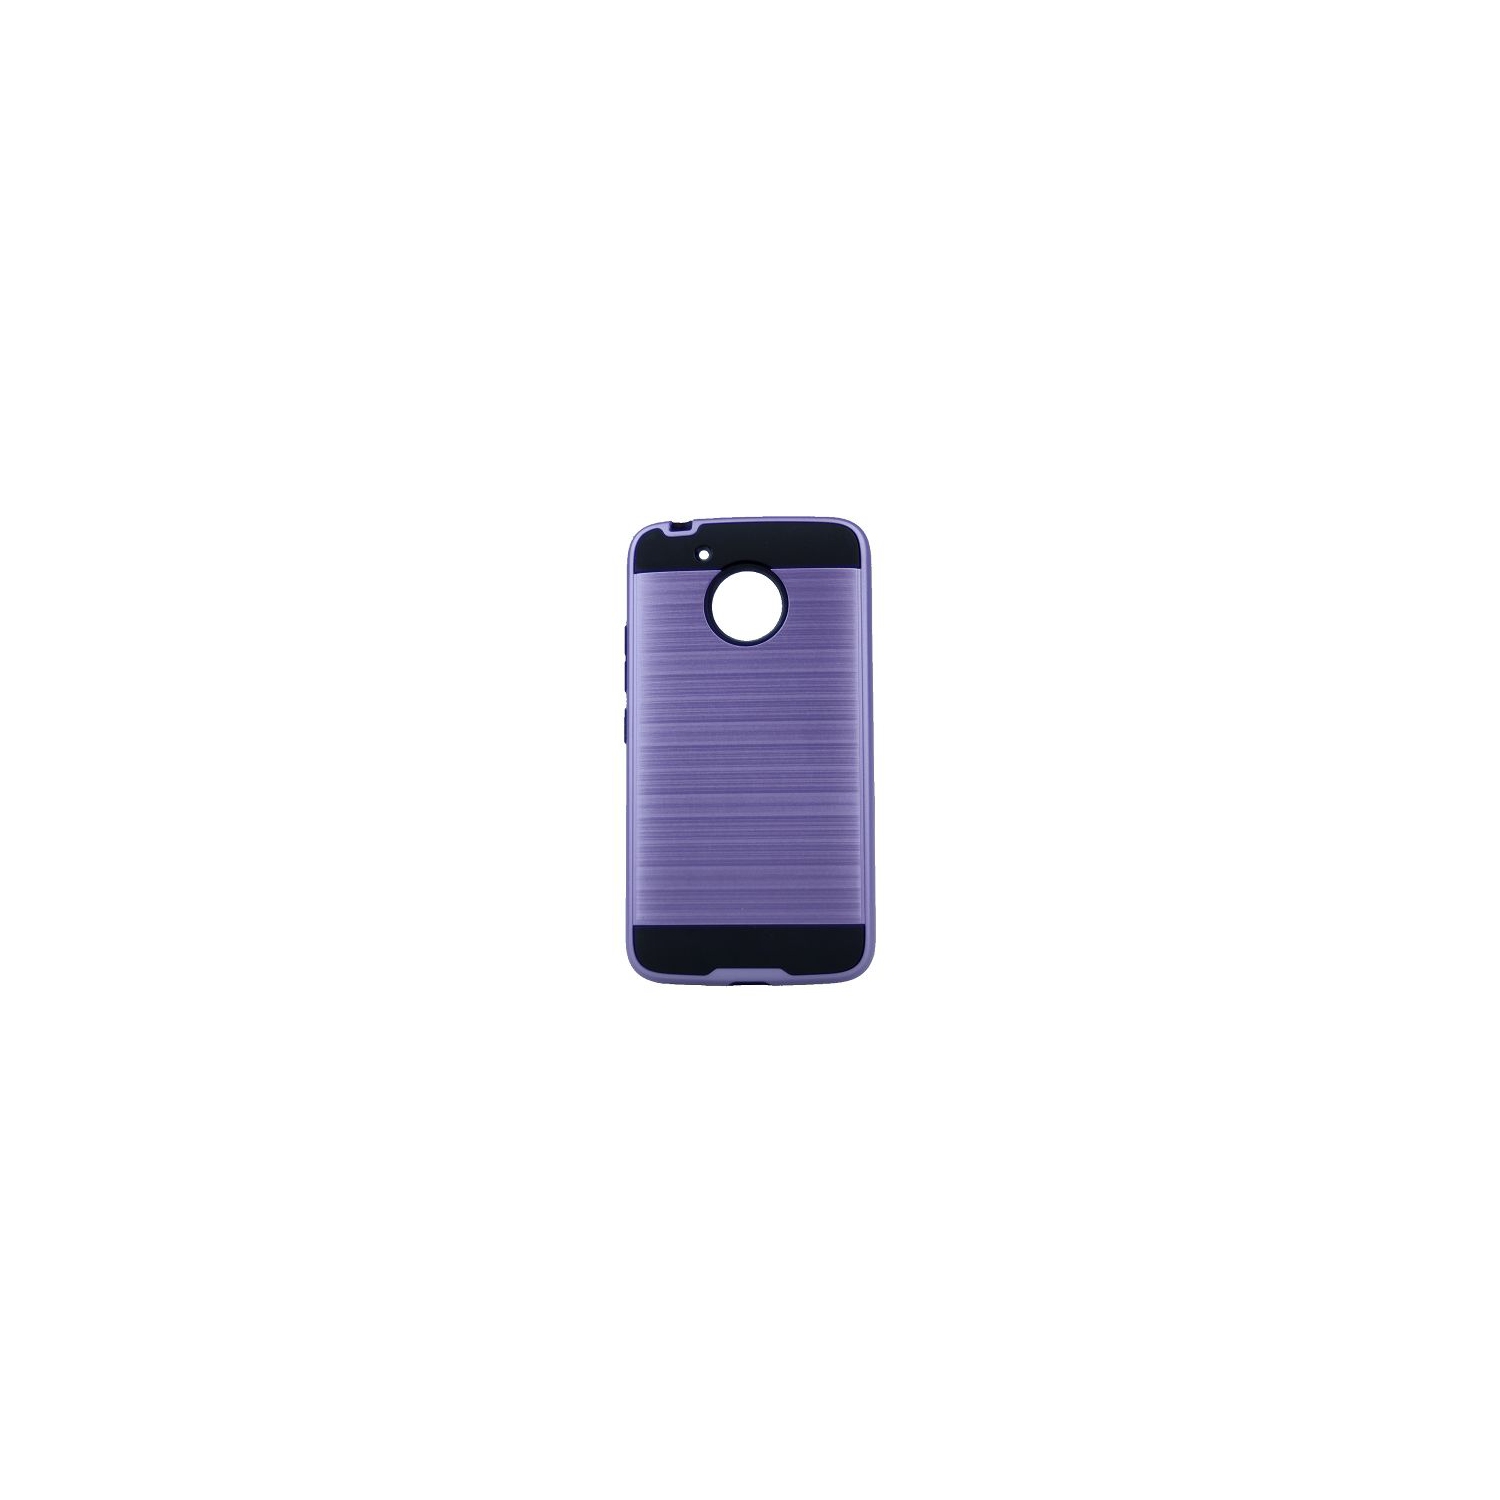 Moto G5 Blush Texture Hard Cover Case, Purple